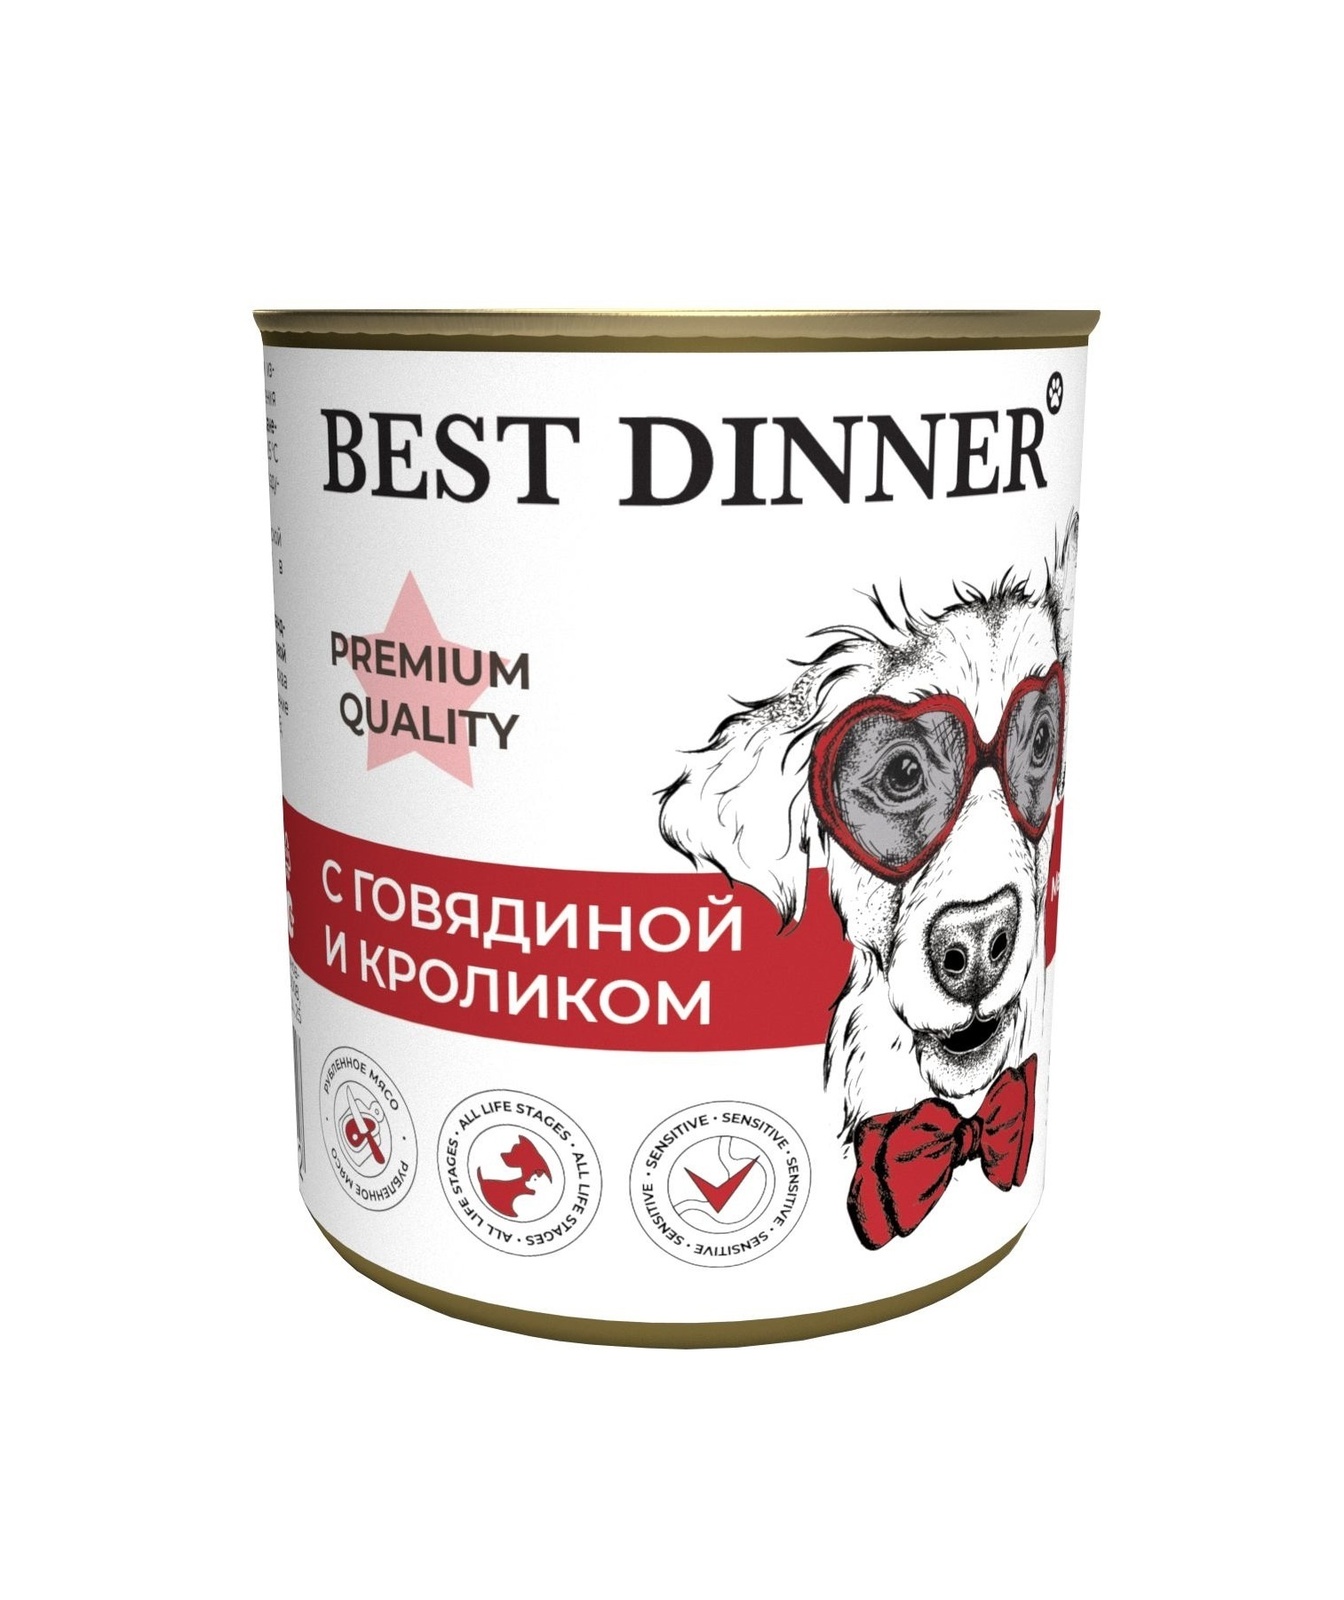 Best Dinner Best Dinner консервы Premium меню №3 С говядиной и кроликом (340 г) best dinner best dinner консервы для собак super premium с говядиной и языком 340 г